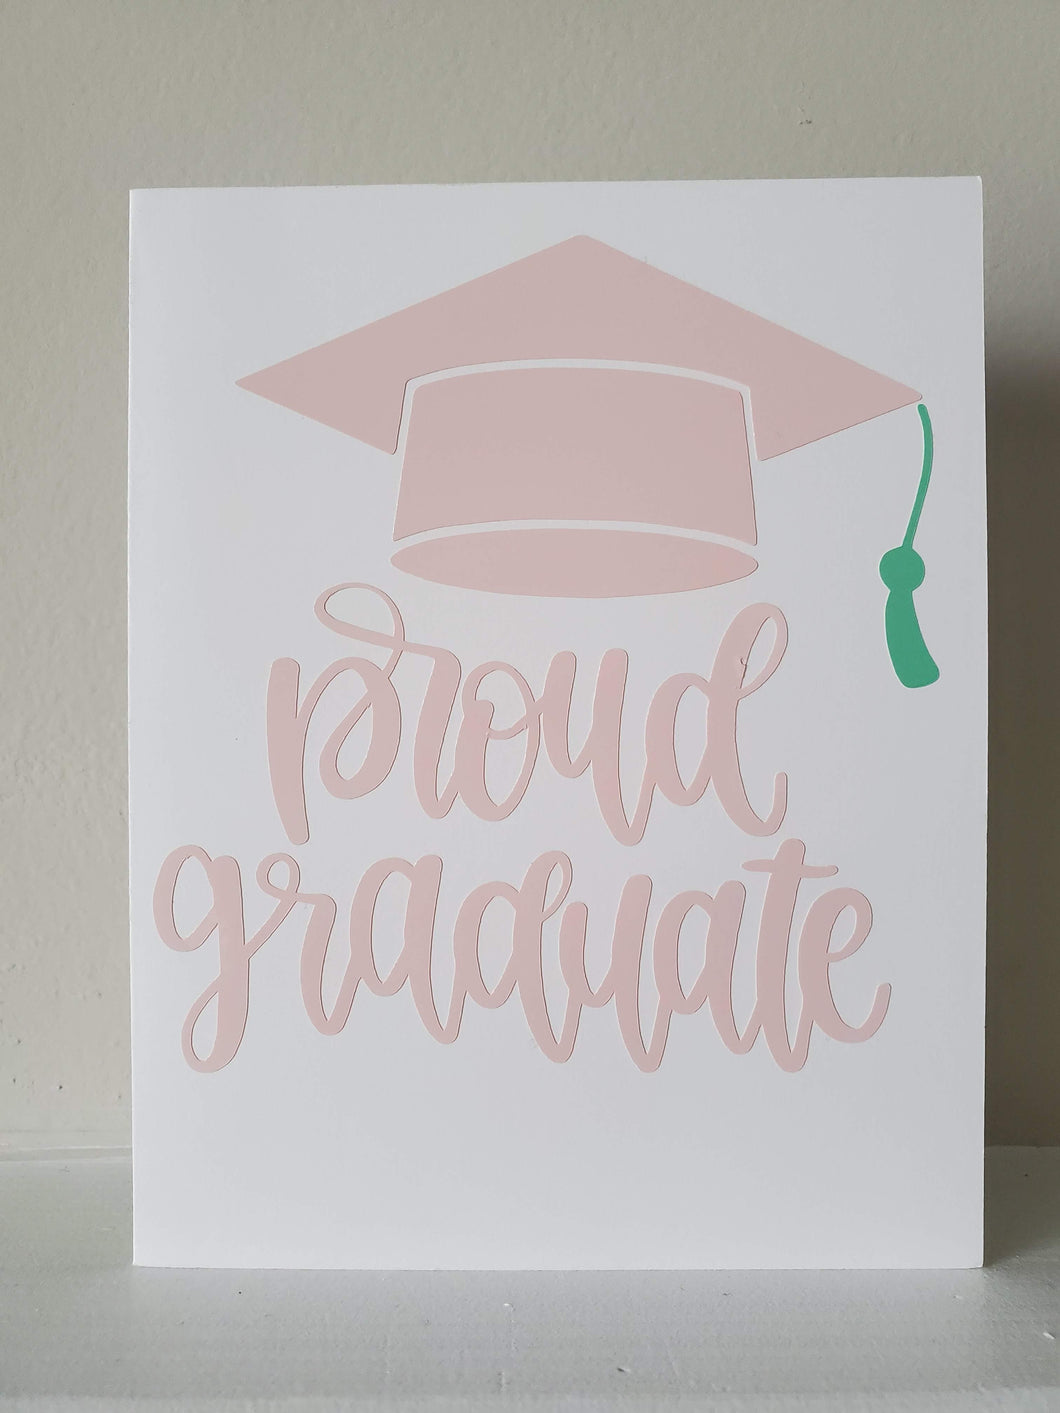 Proud Graduate Greeting Card